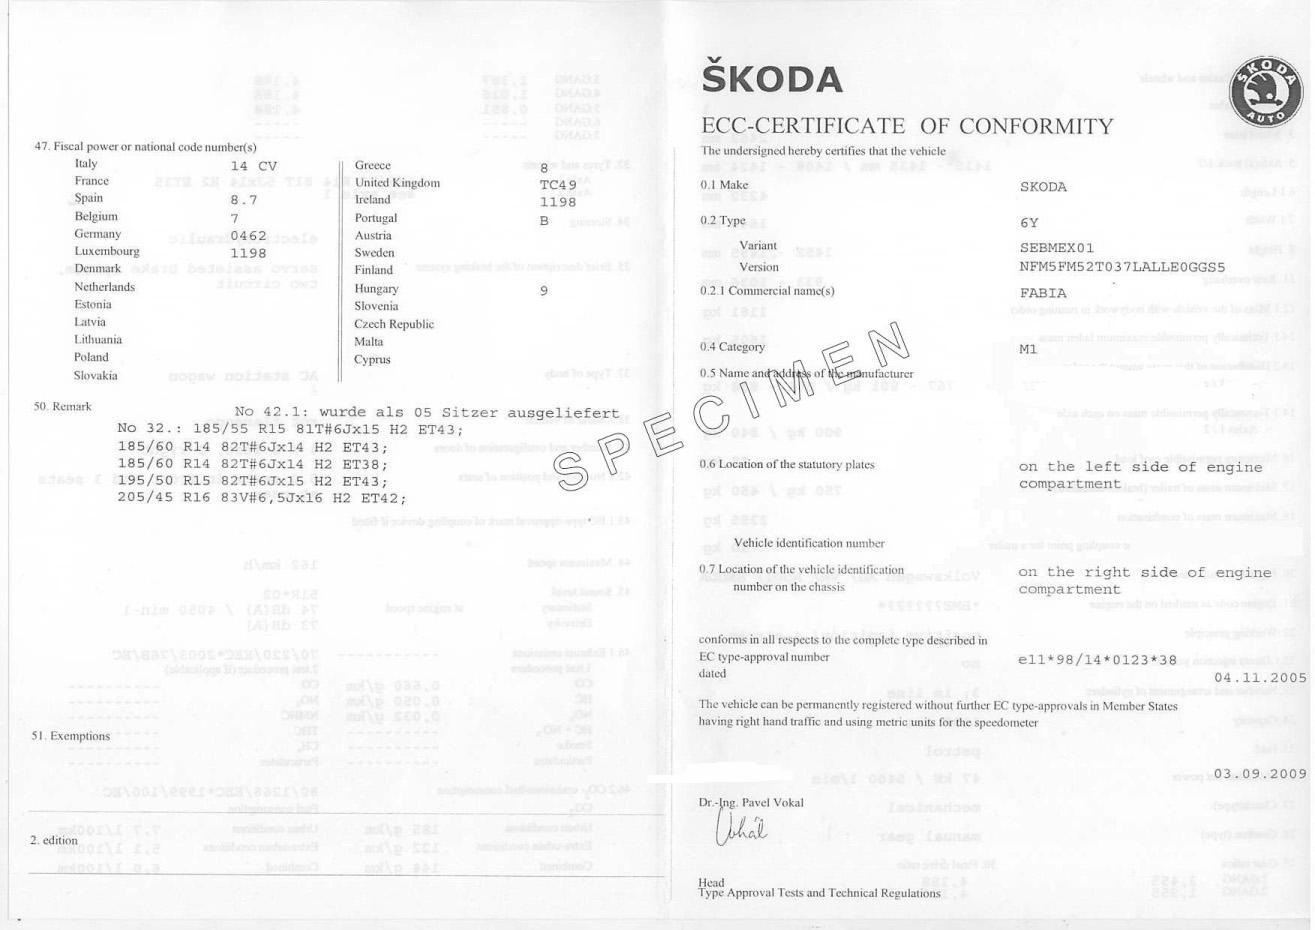 Obtenir un certificat de conformité Skoda gratuitement